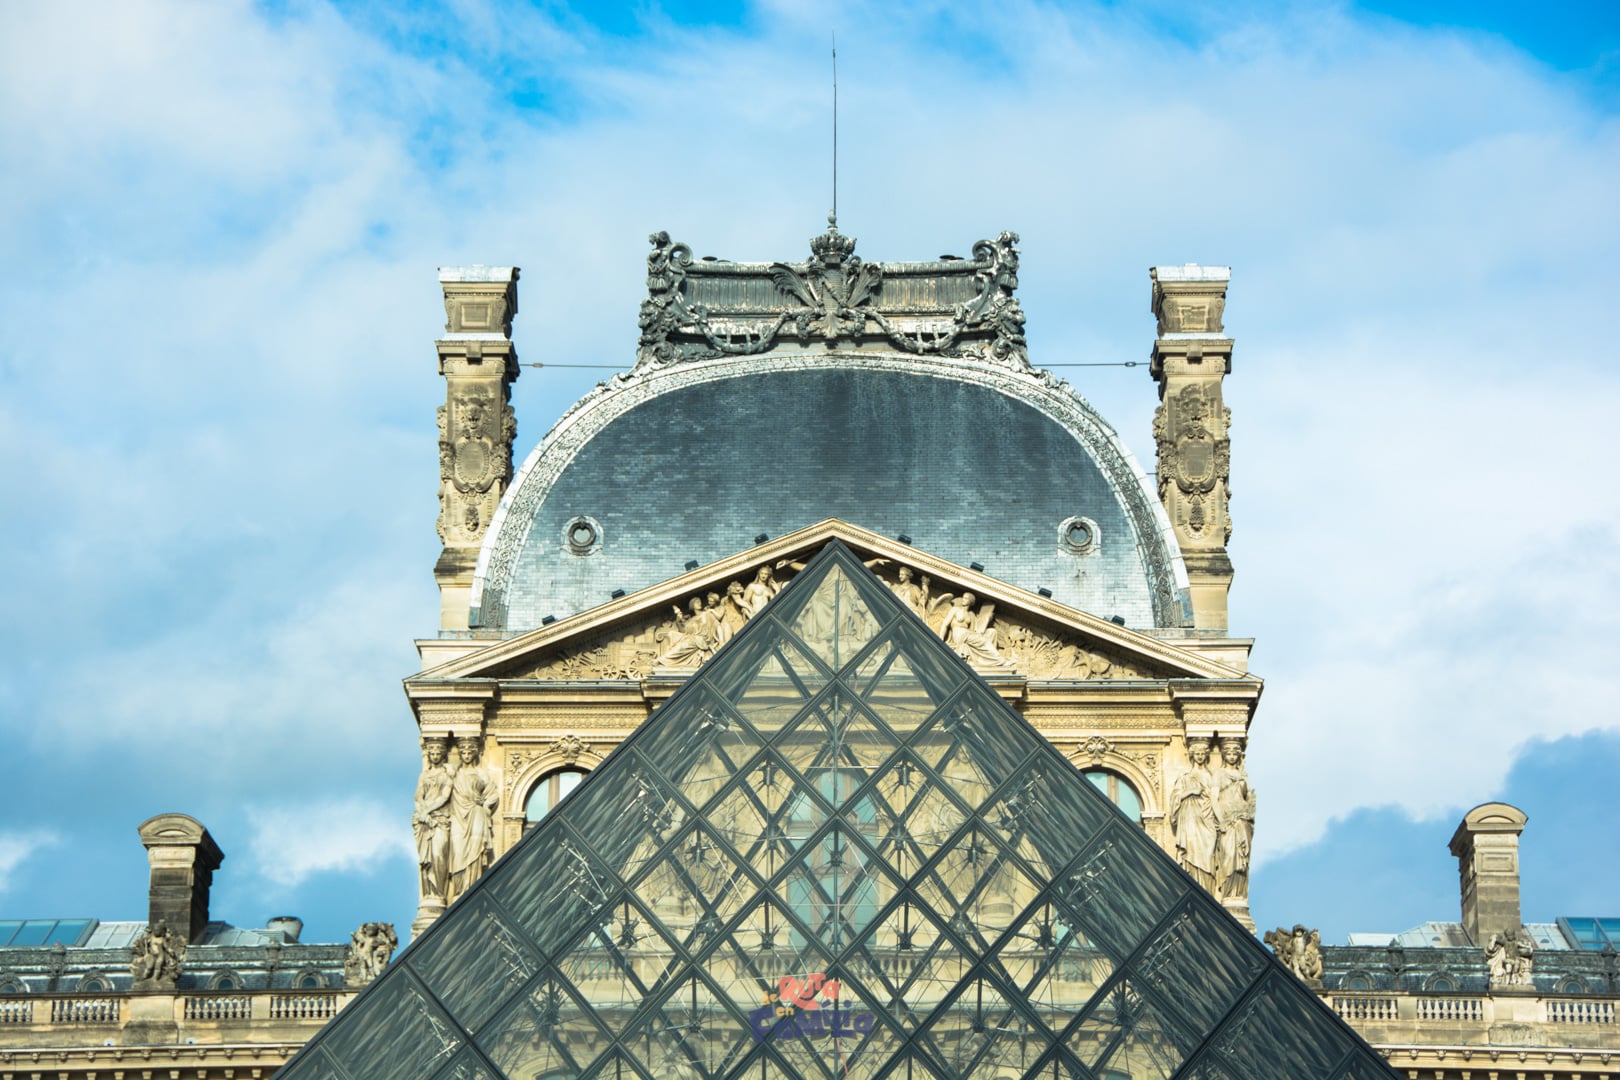 La Pirámide del Museo del Louvre